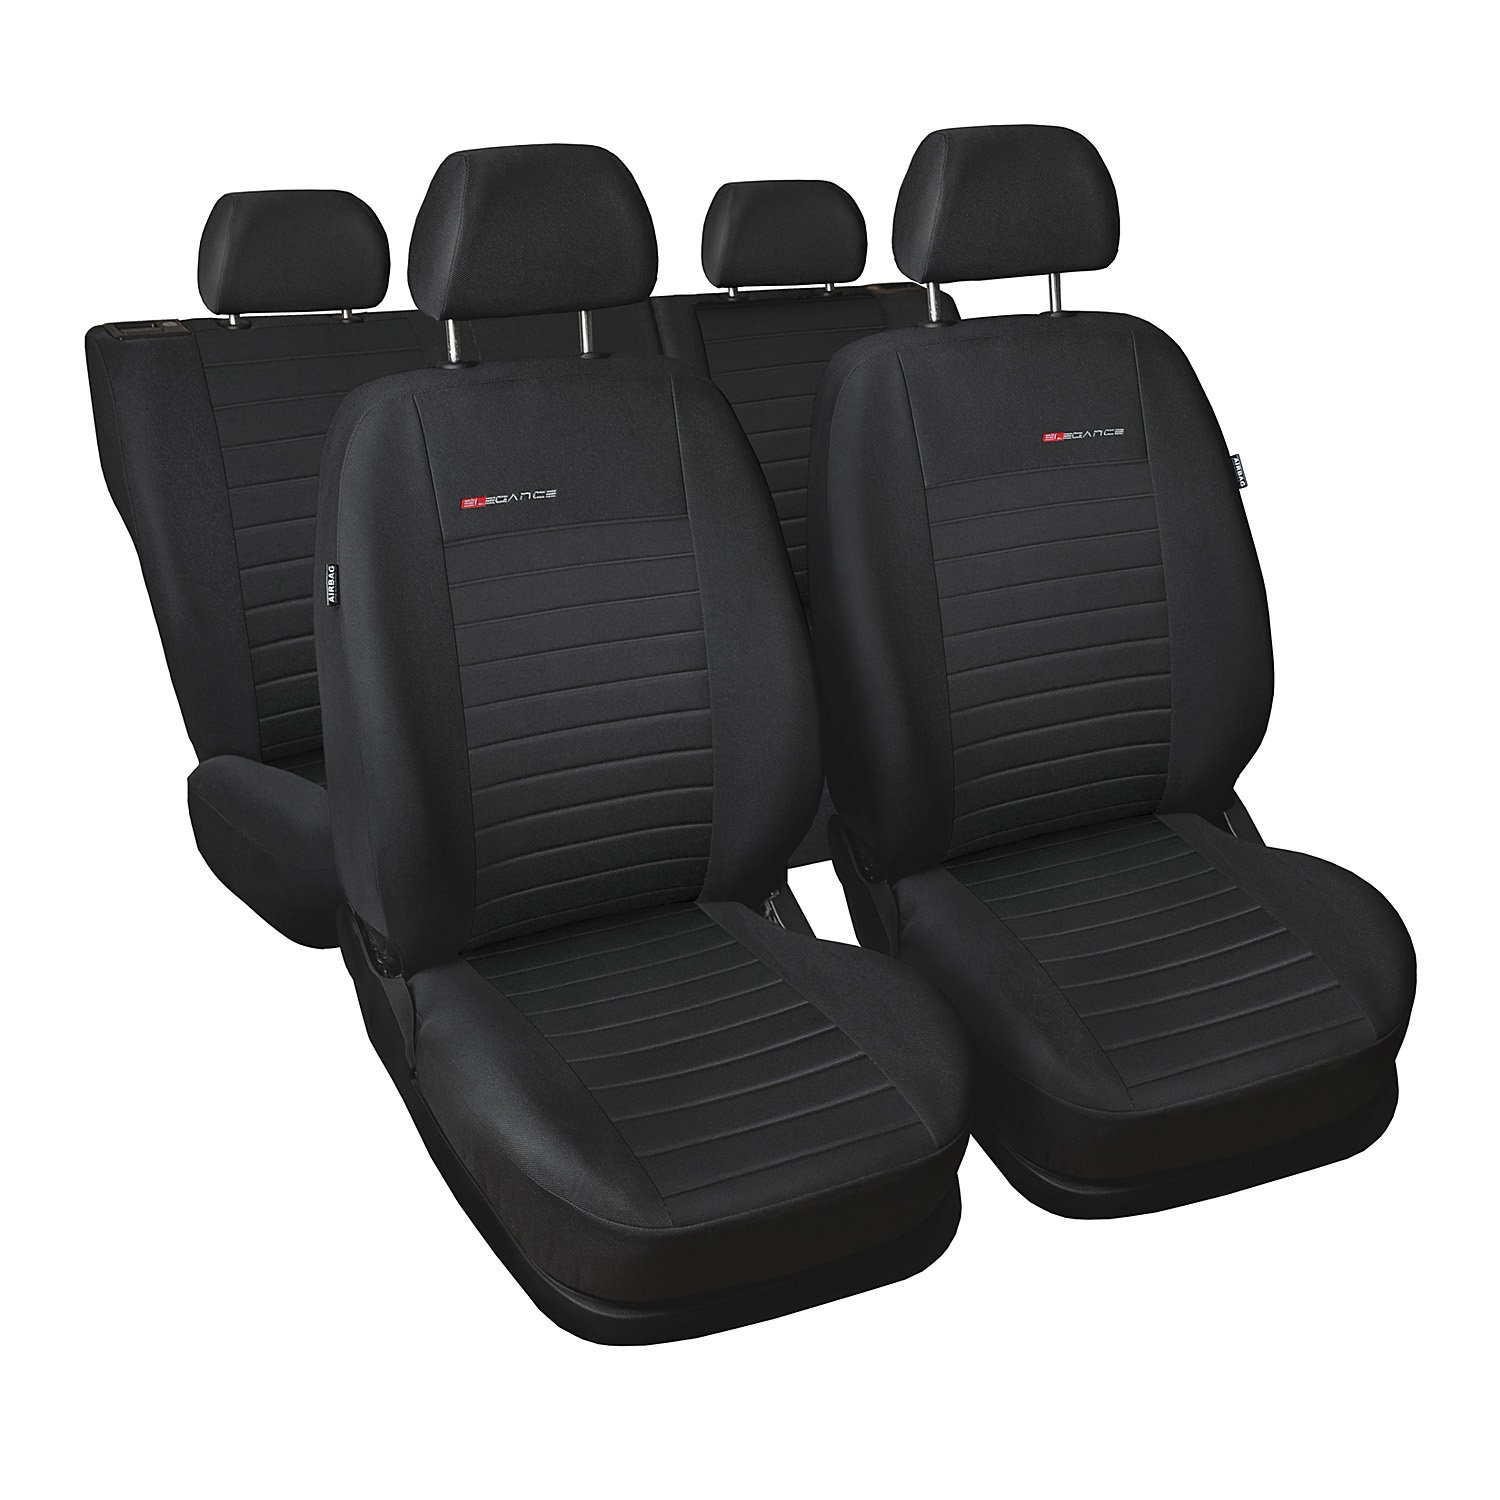 GSC Sitzbezüge Autositzbezug Komplettset 5-Sitze, Universal Grau, Elegance, kompatibel mit Nissan X-Trail 5-Sitze von Auto-Dekor